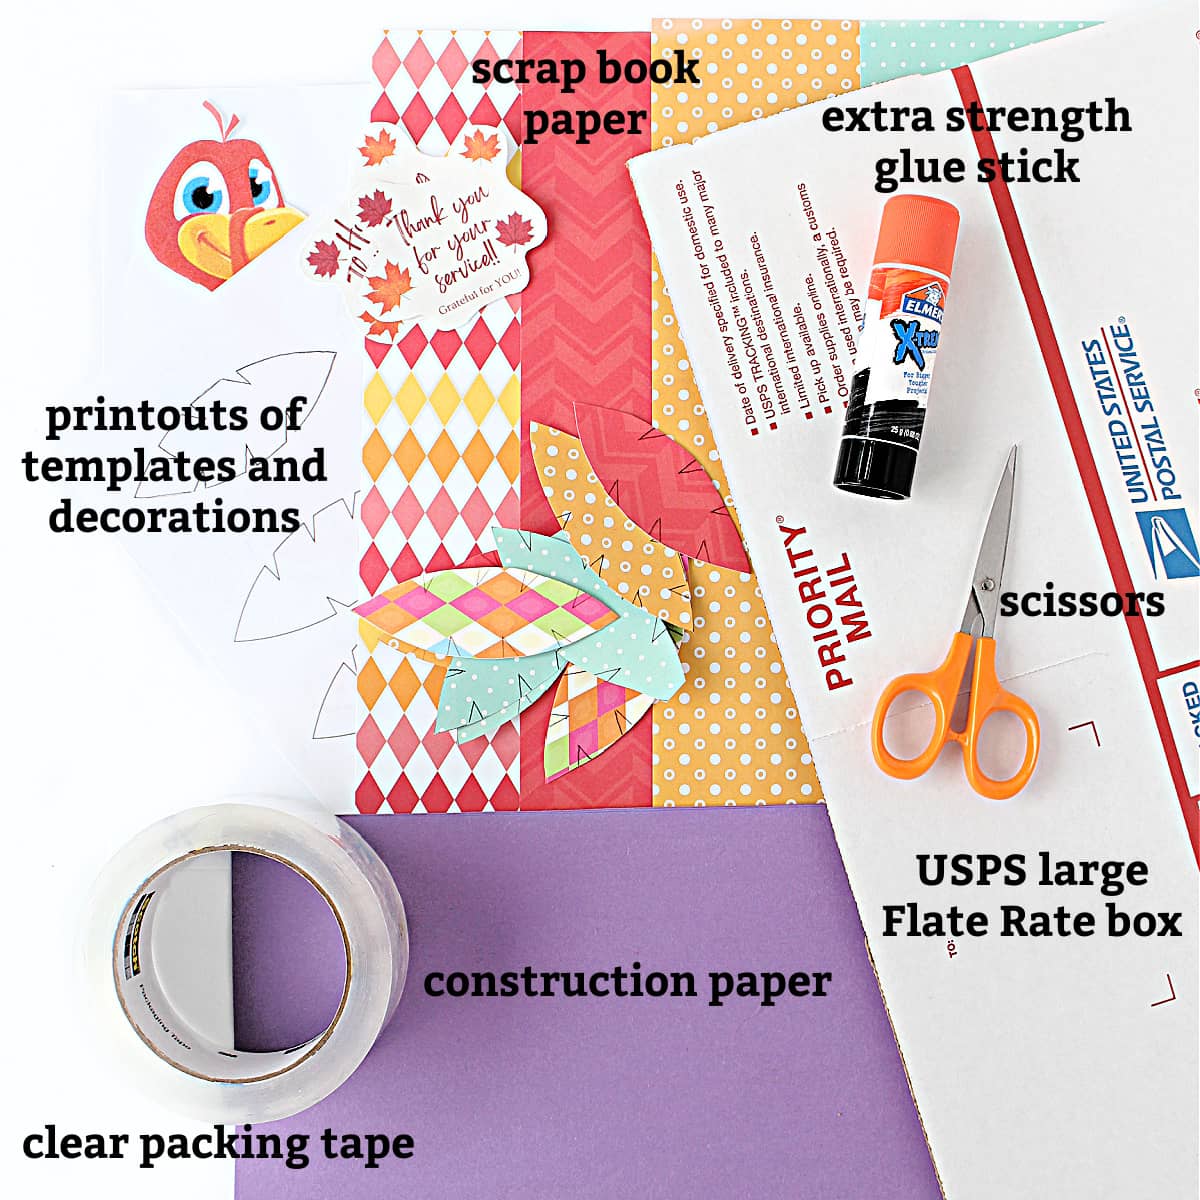 Materials: decoration printouts, glue stick, scissors, box, clear packing tape, construction paper, scrap book paper.